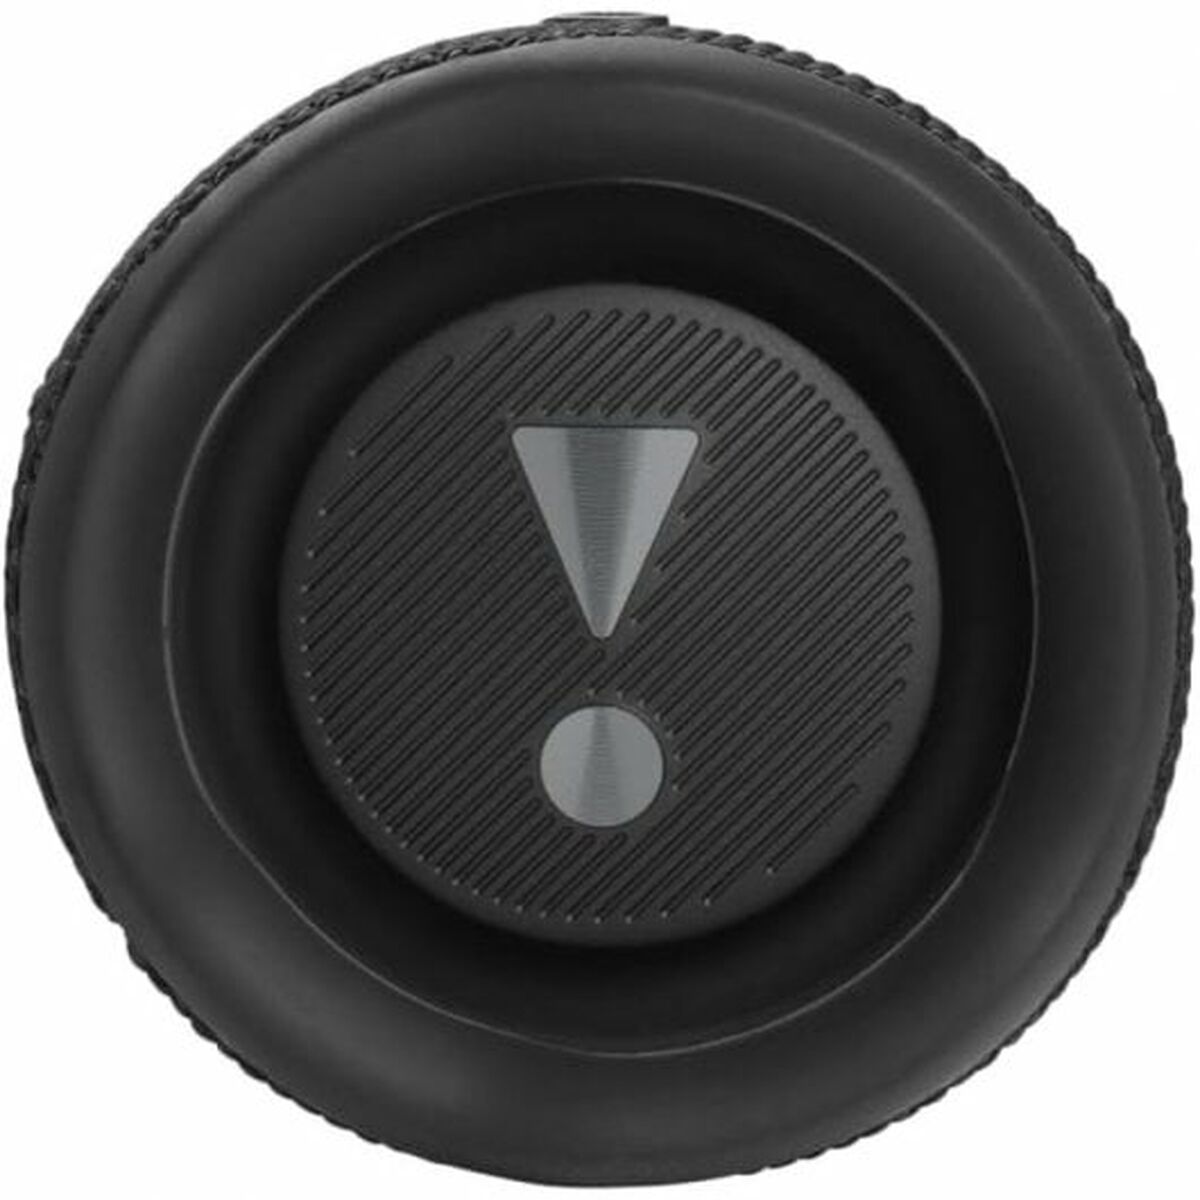 Tragbare Bluetooth-Lautsprecher JBL Flip 6 20 W Schwarz